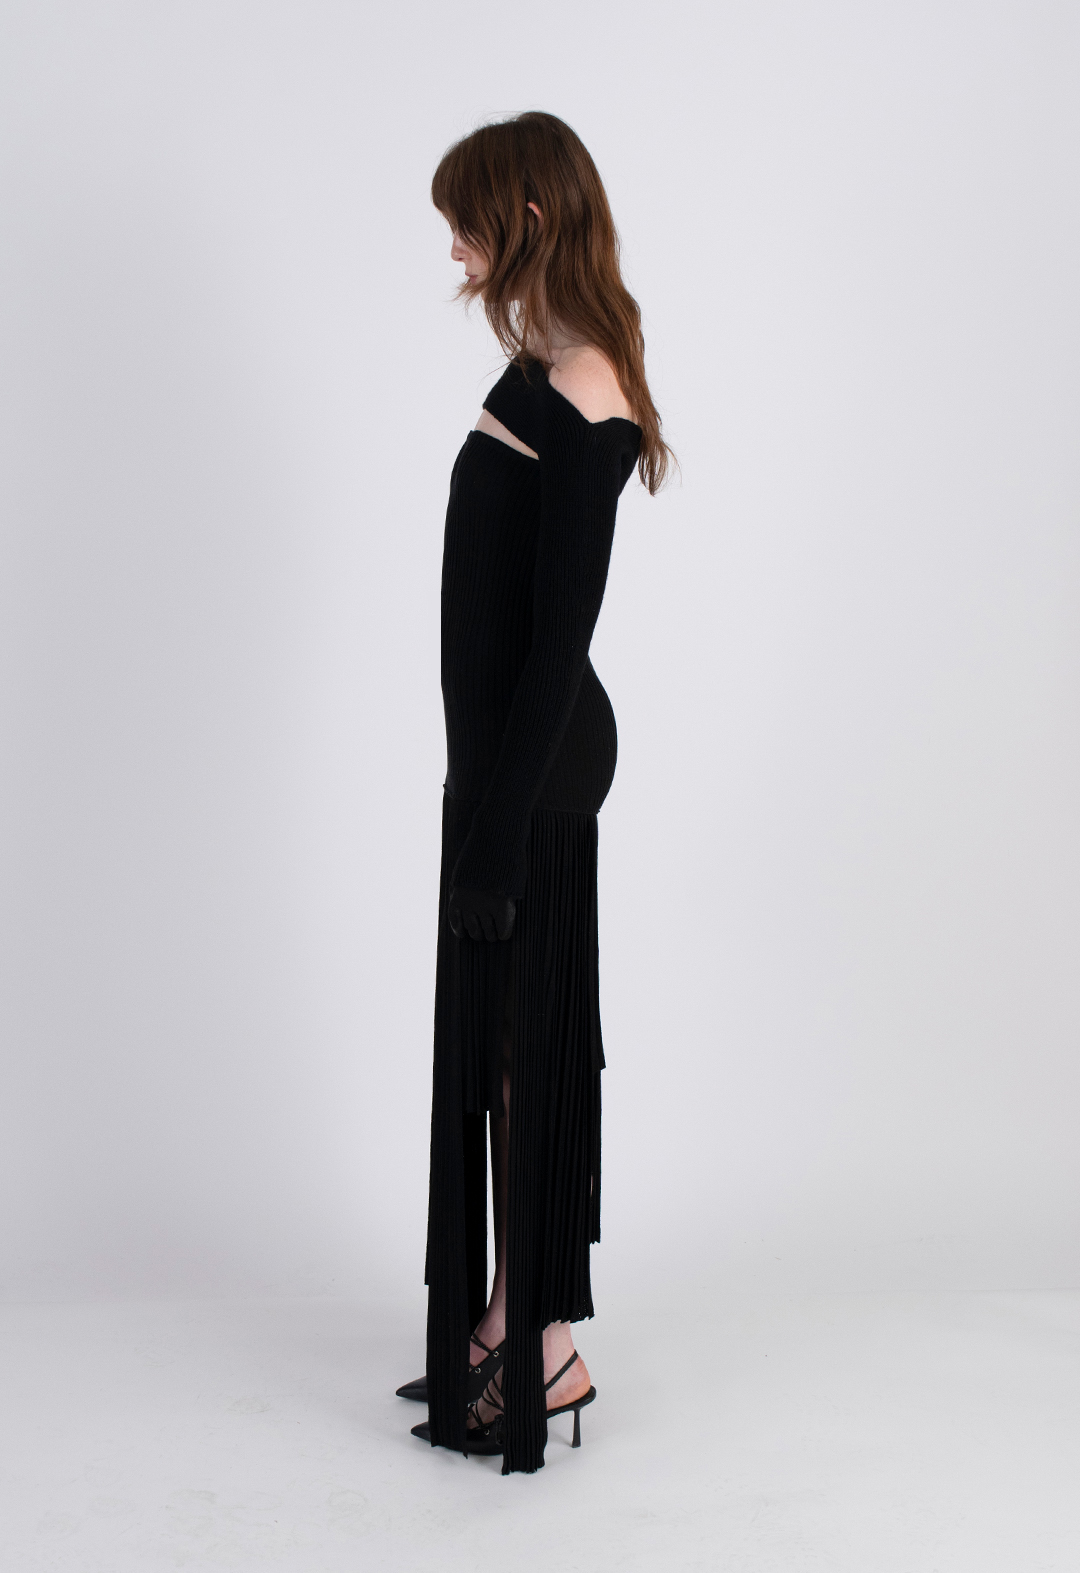 Side view of a model wearing a black knit dress with an asymmetrical hem.